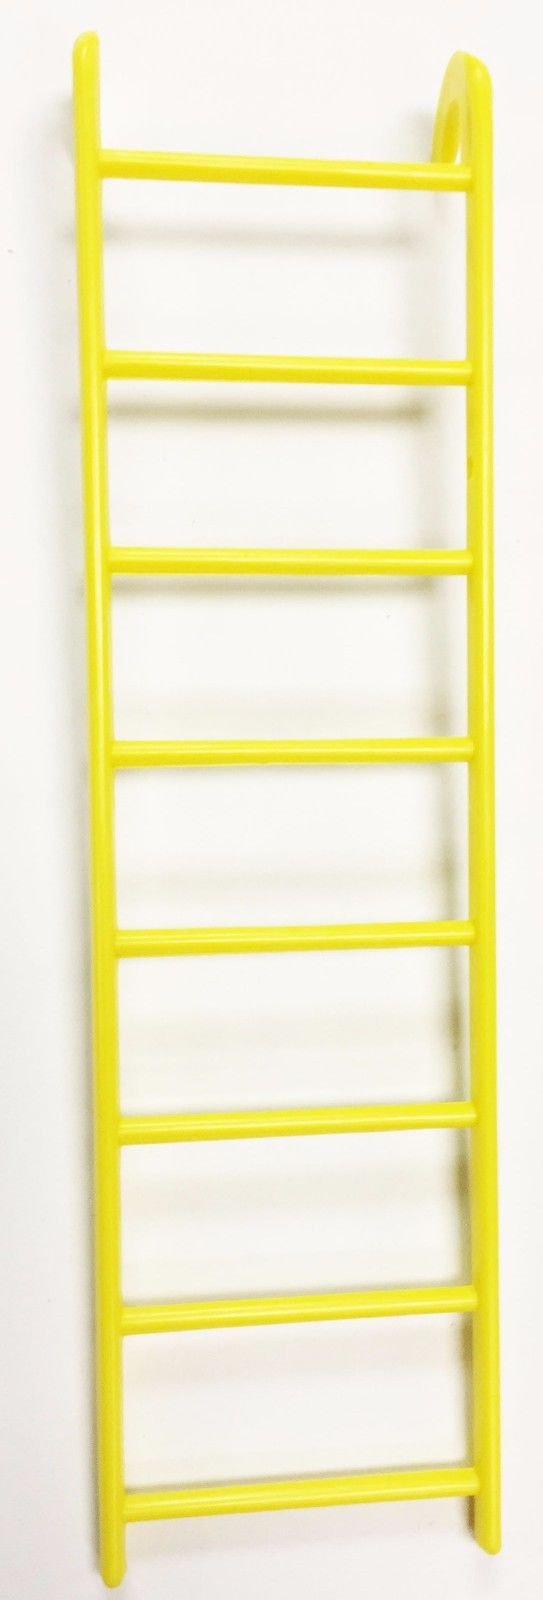 Bonka Bird Toys 36352 Bird Toy Ladder, Yellow